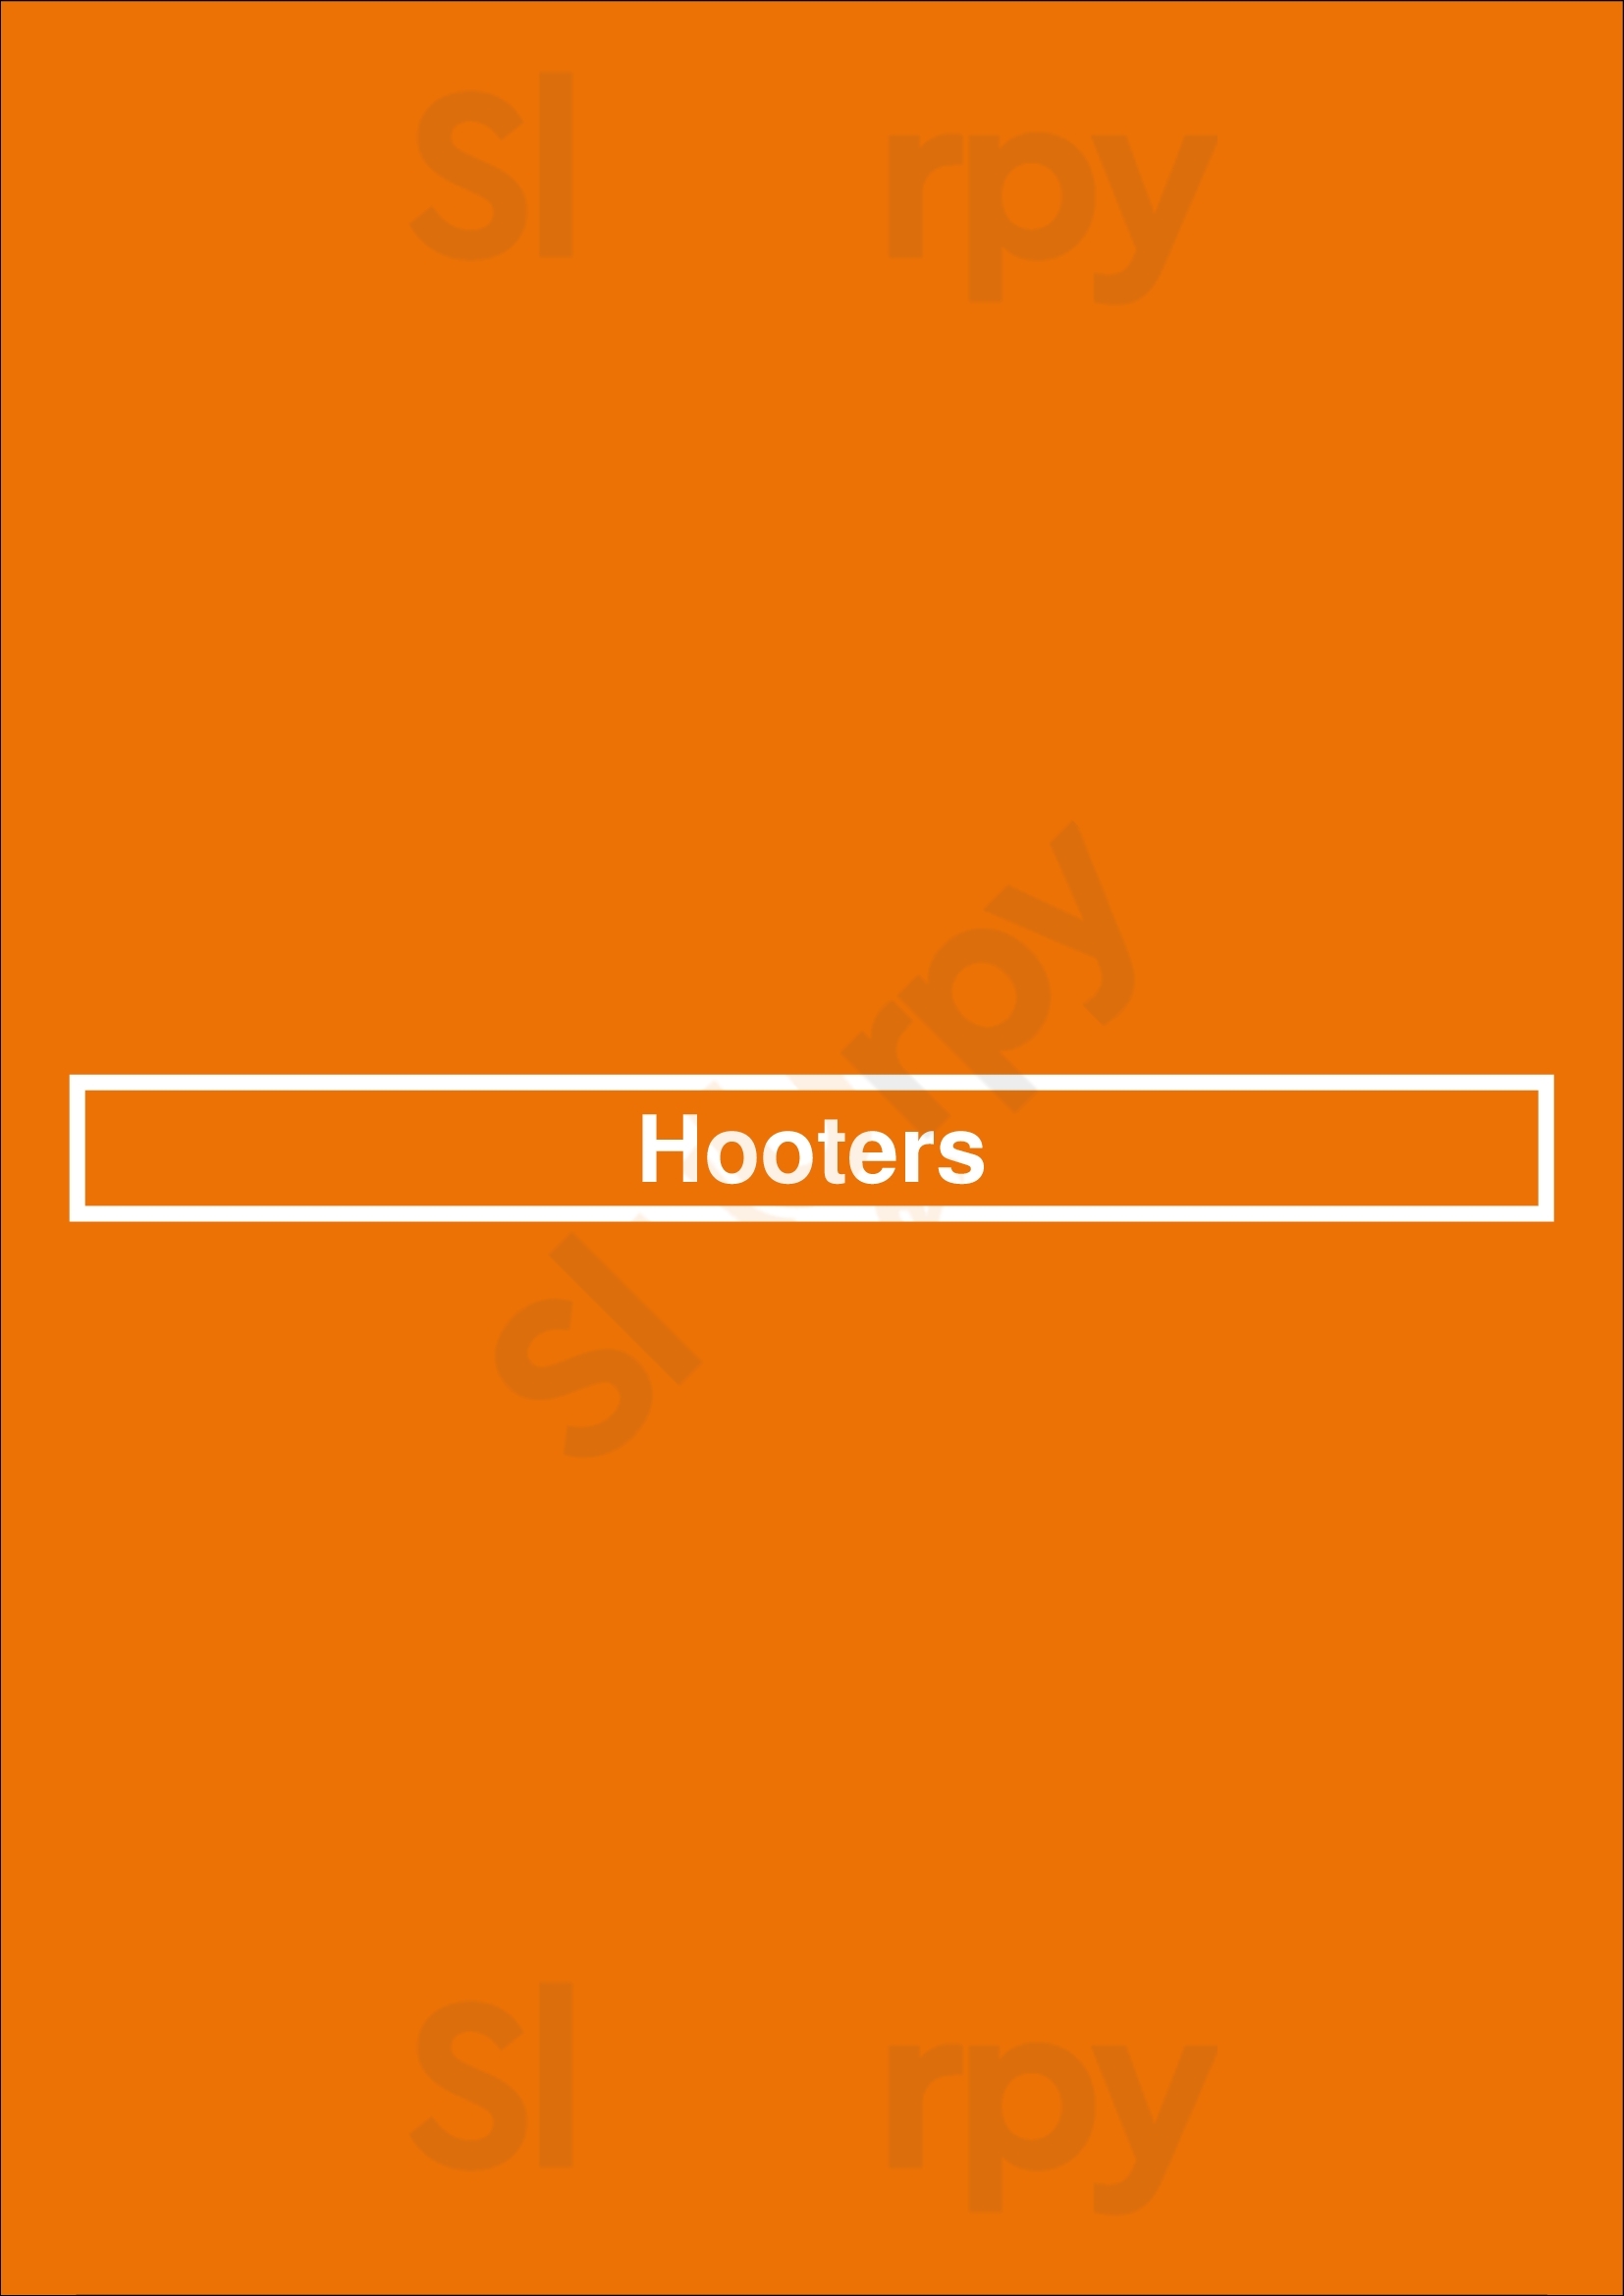 Hooters Birmingham Menu - 1